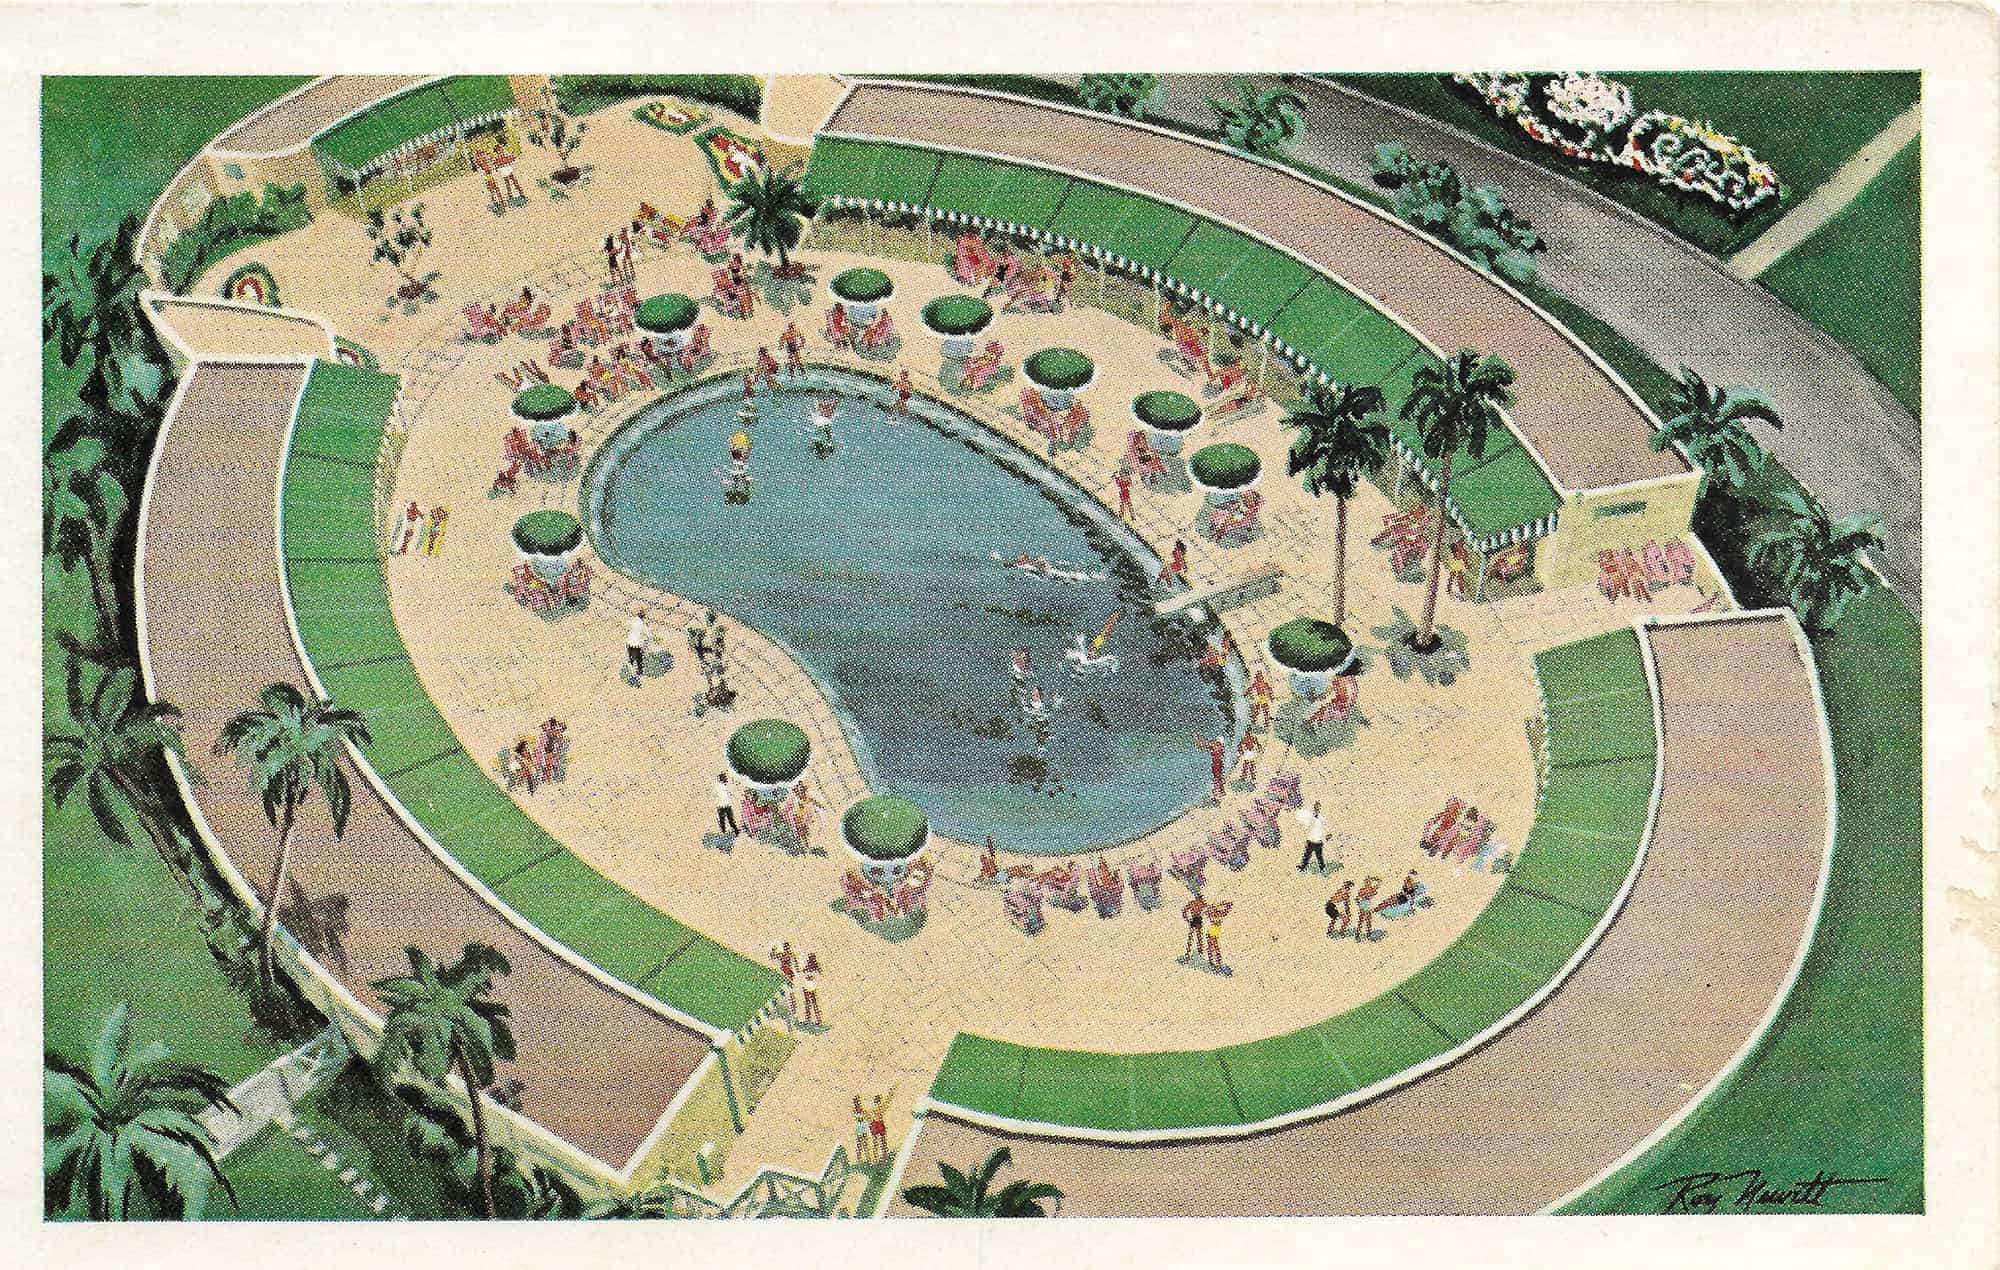 Hotel Nacional swimming pool, 1950s